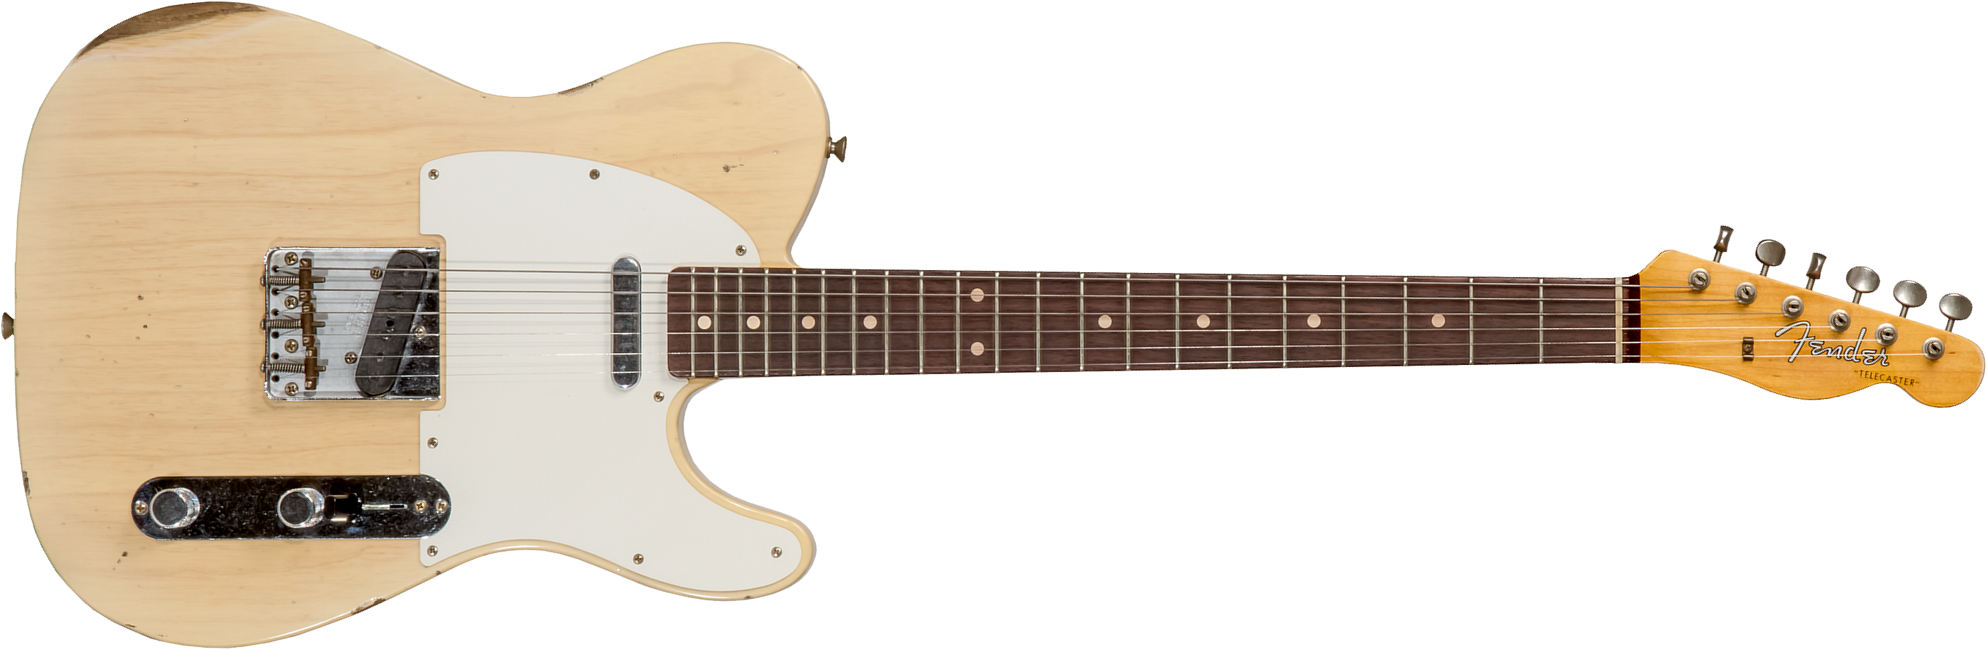 Fender Custom Shop Tele 1960 2s Ht Rw #cz569492 - Relic Natural Blonde - Guitarra eléctrica con forma de tel - Main picture